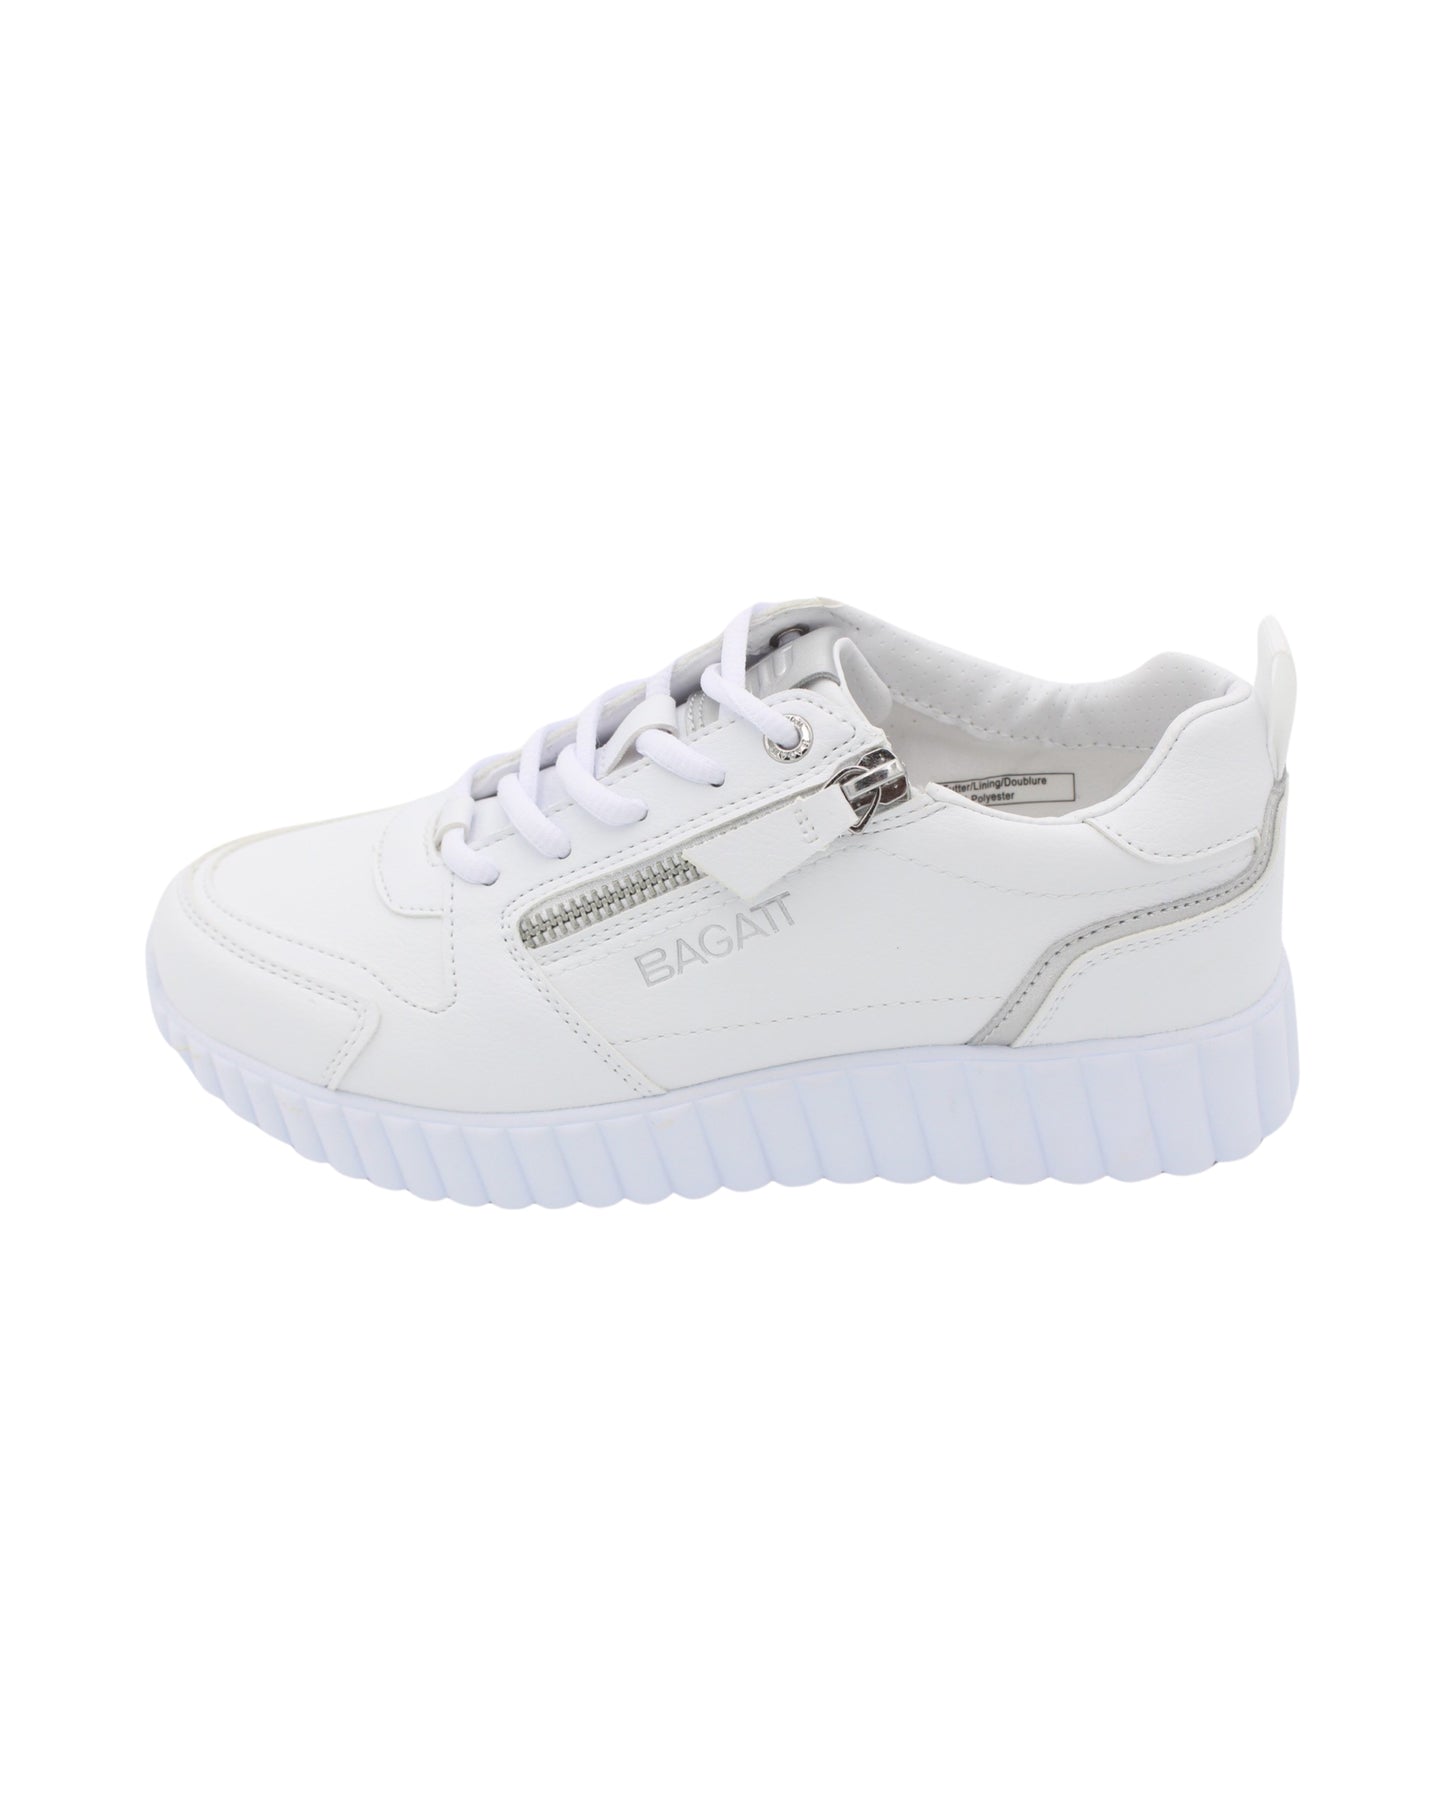 Bagatt - Ladies Shoes Trainers White (2228)